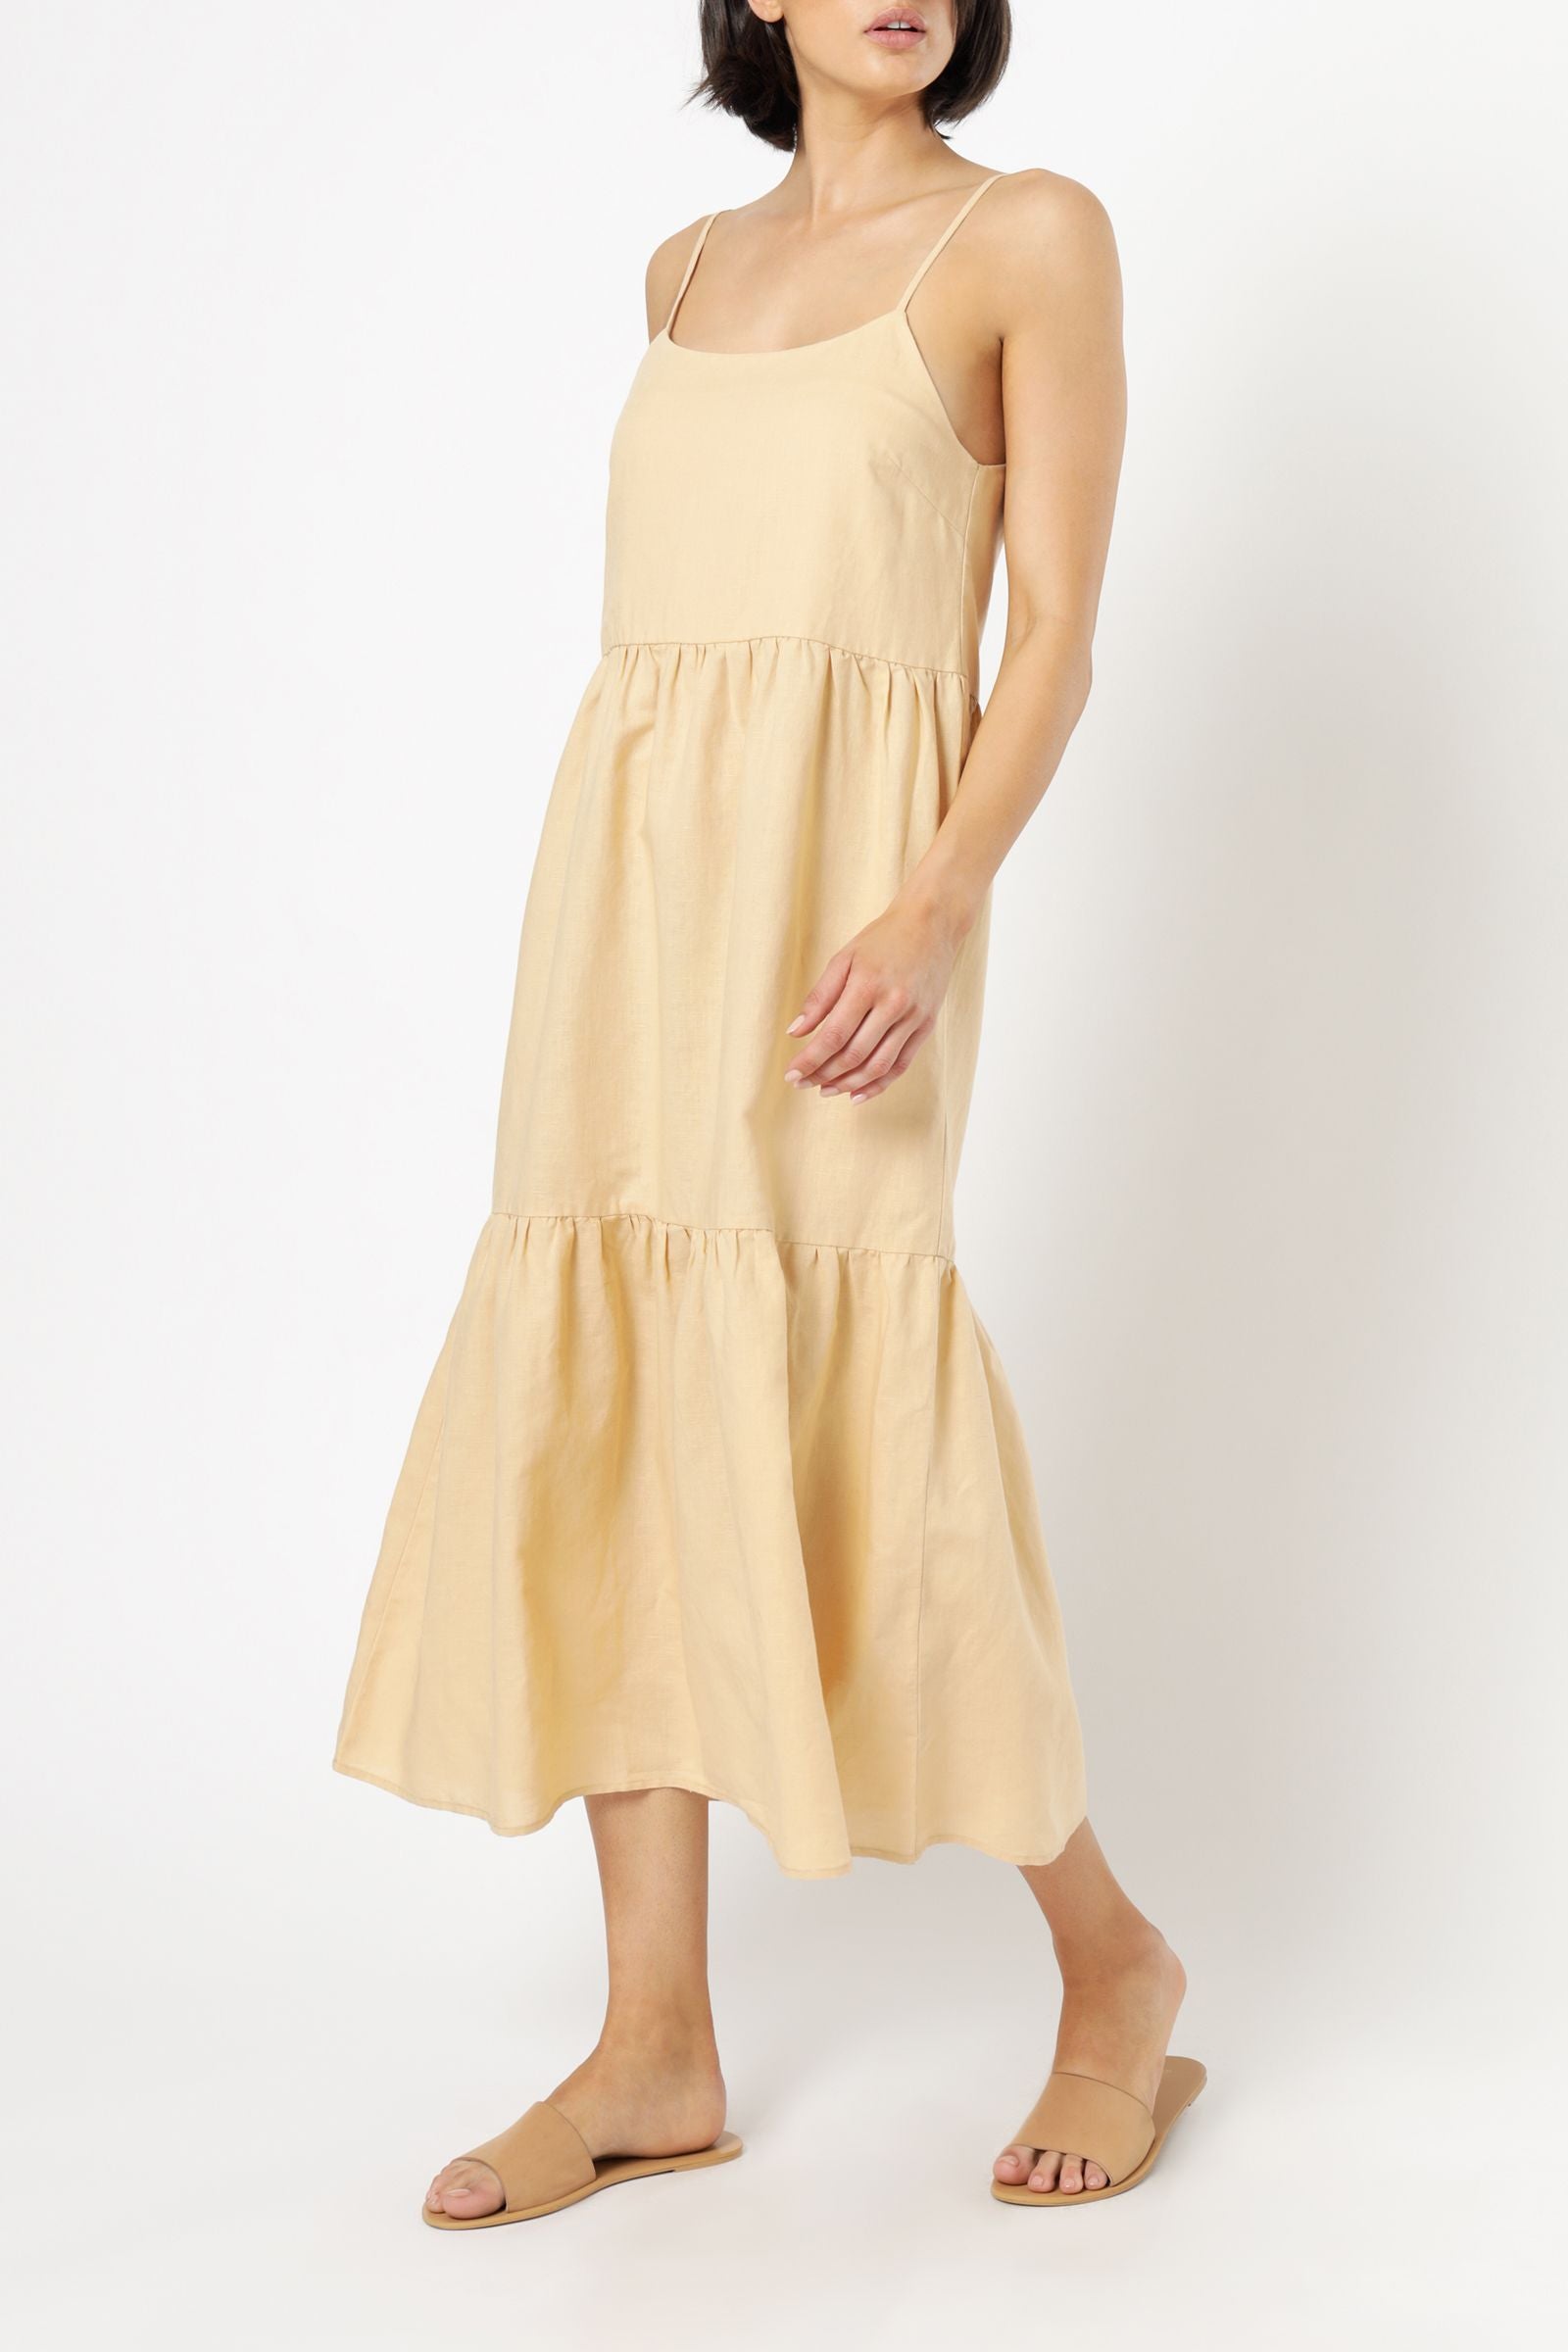 Nude Lucy Miles Linen Midi Dress Apricot Dress 